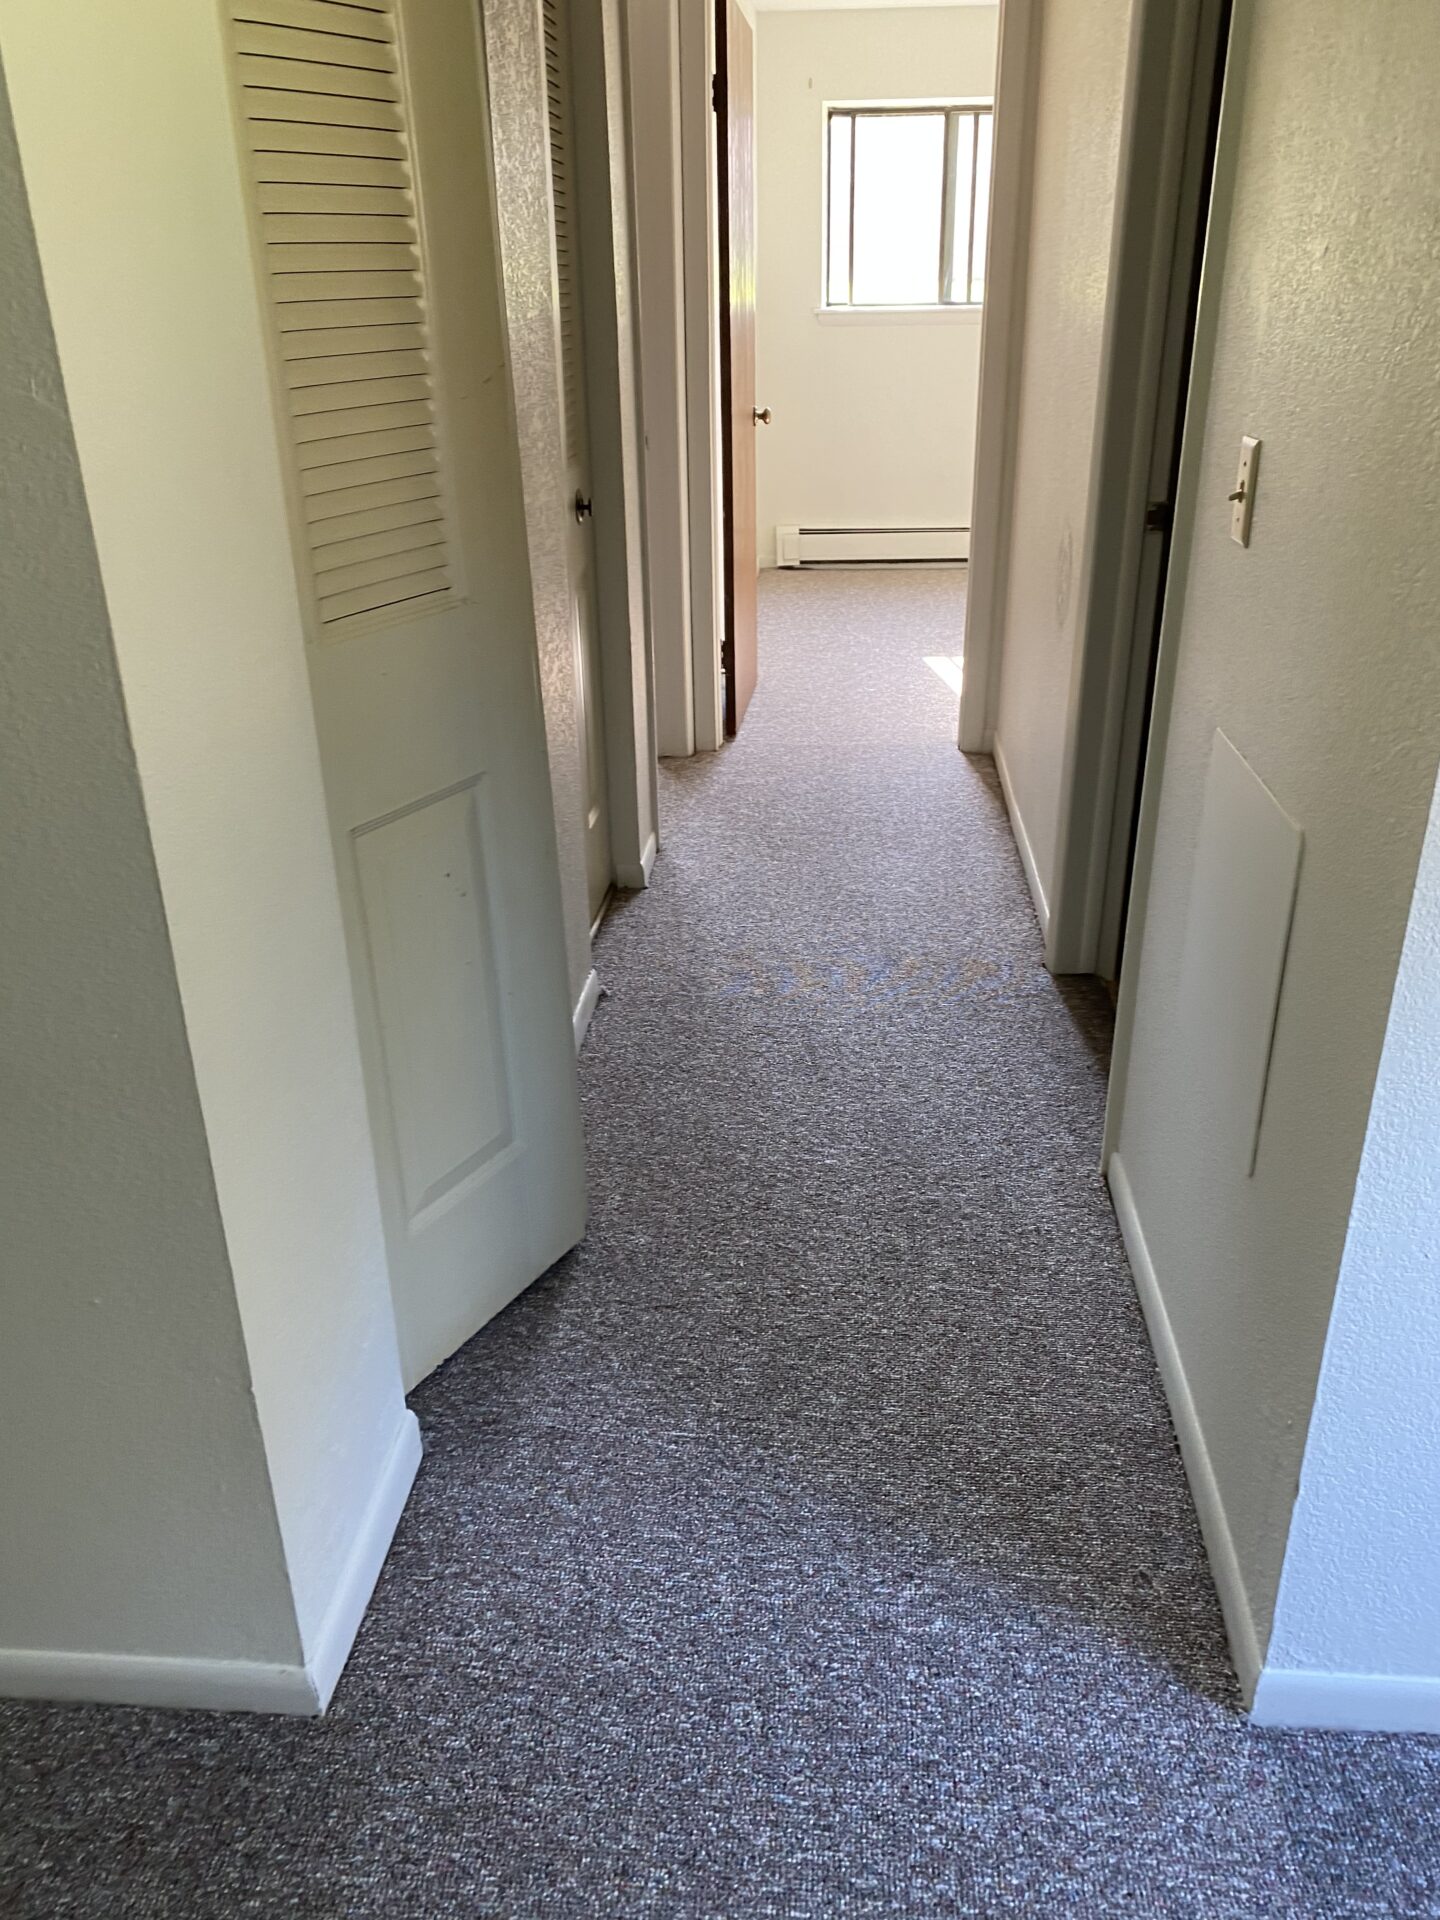 Ridgeview apartments corridor and floor close view